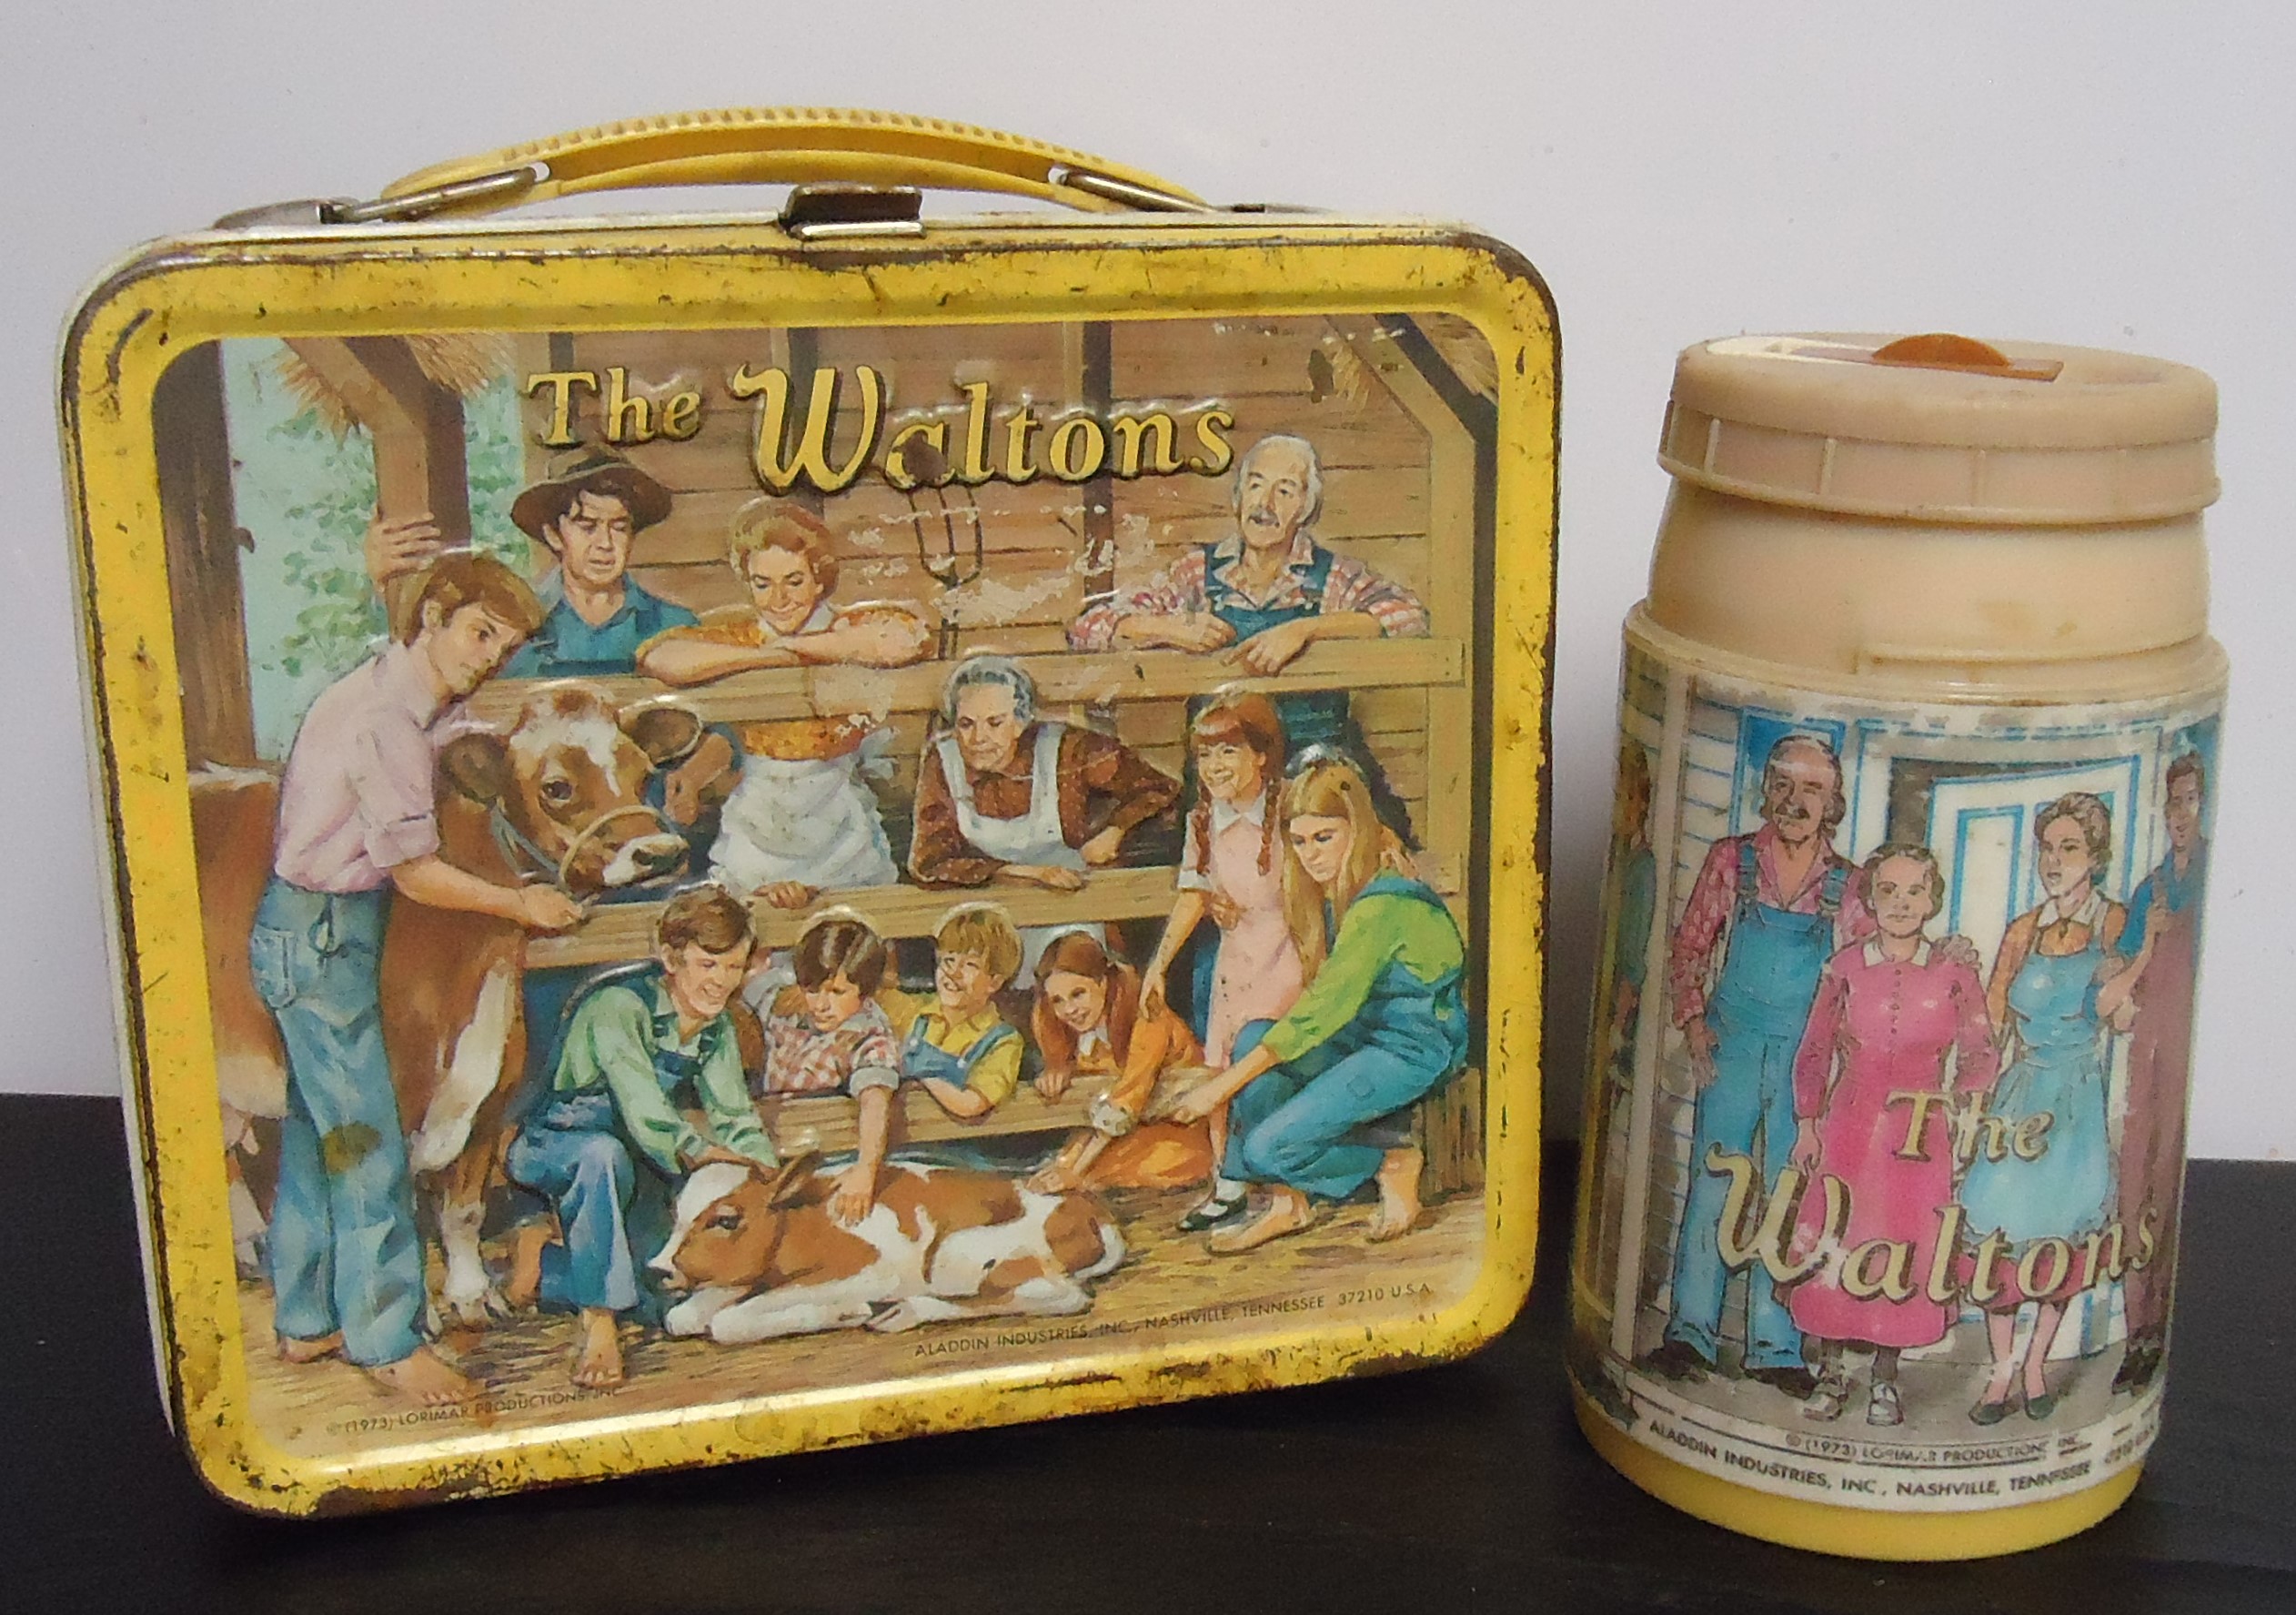 (7) "The Walton's" Metal Lunch Box
W/ Thermos
$60.00